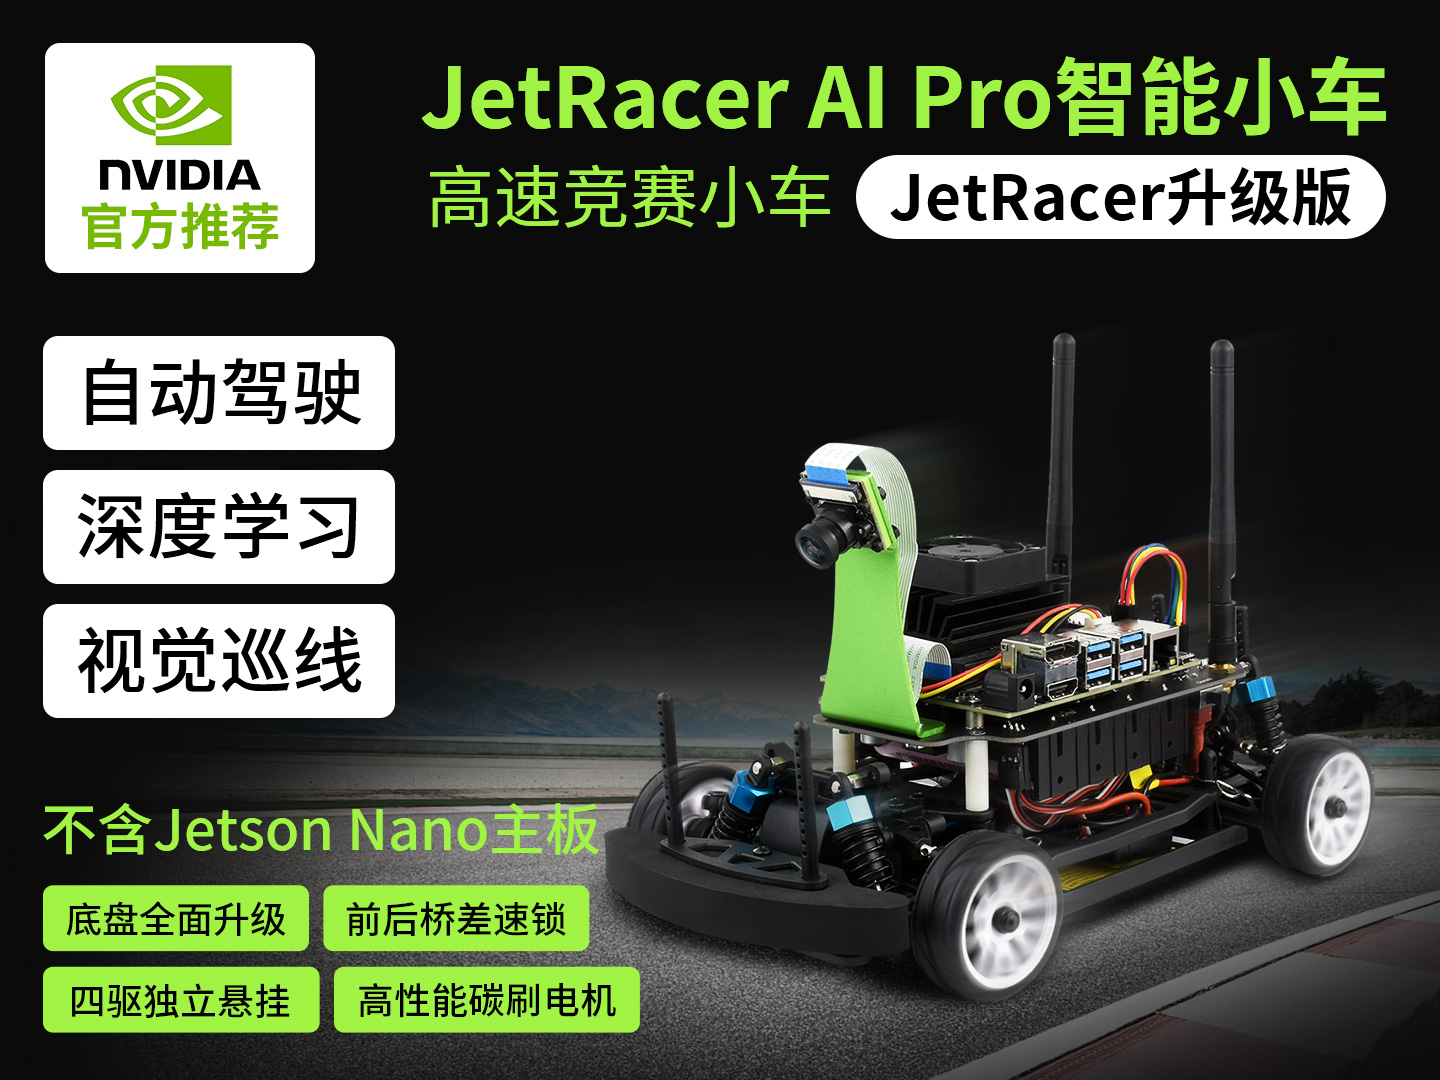 JetRacer Pro人工智能小车AI赛车机器人 高速竞赛赛车 自动驾驶 深度学习 不含Jetson Nano